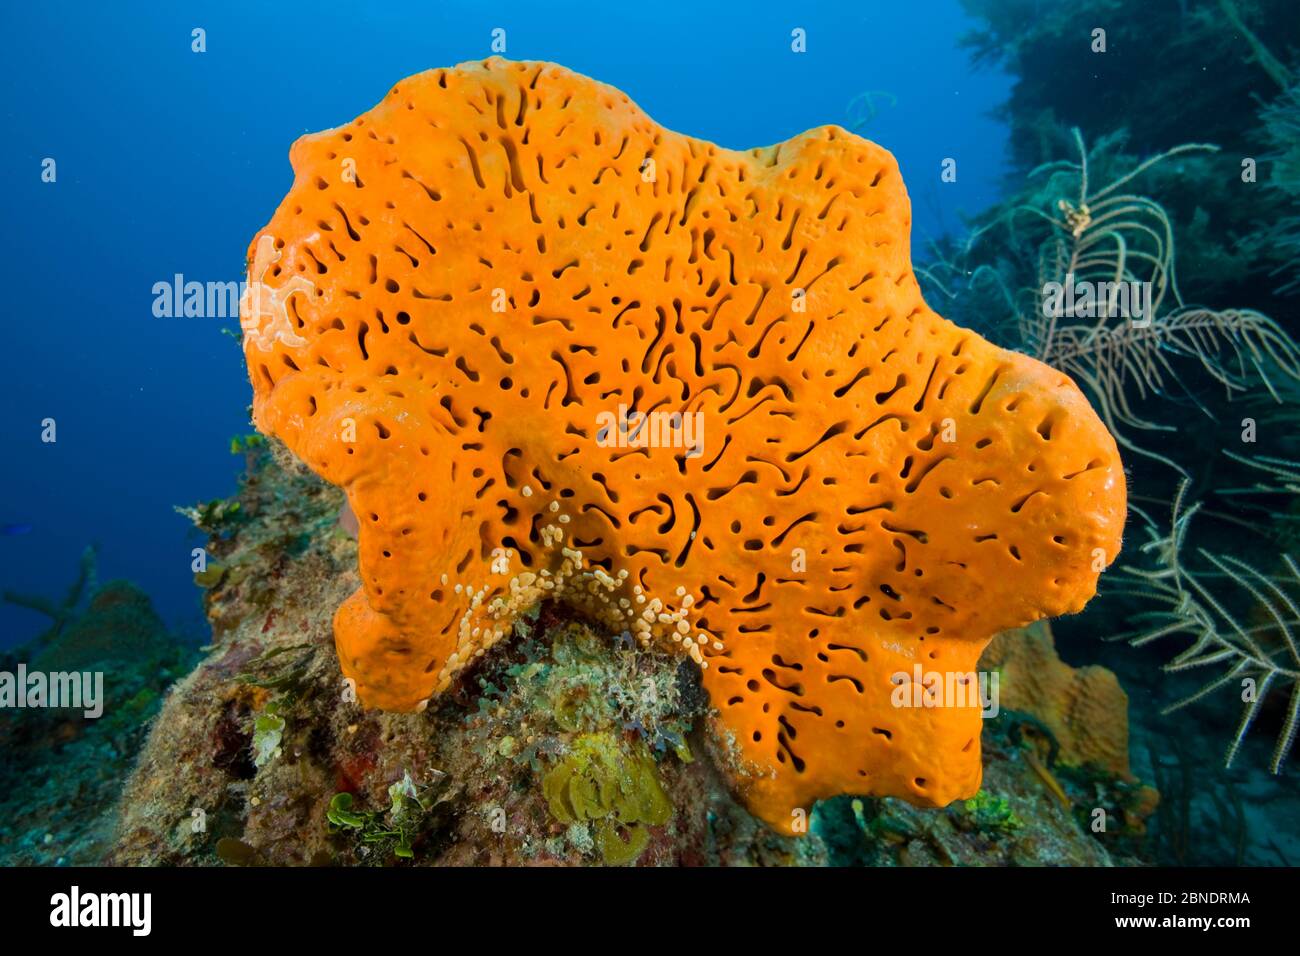 Orange elephant ear sponge (Agelas clathrodes) Santa Lucia, Camaguey, Cuba, Caribbean Sea, Atlantic Ocean Stock Photo